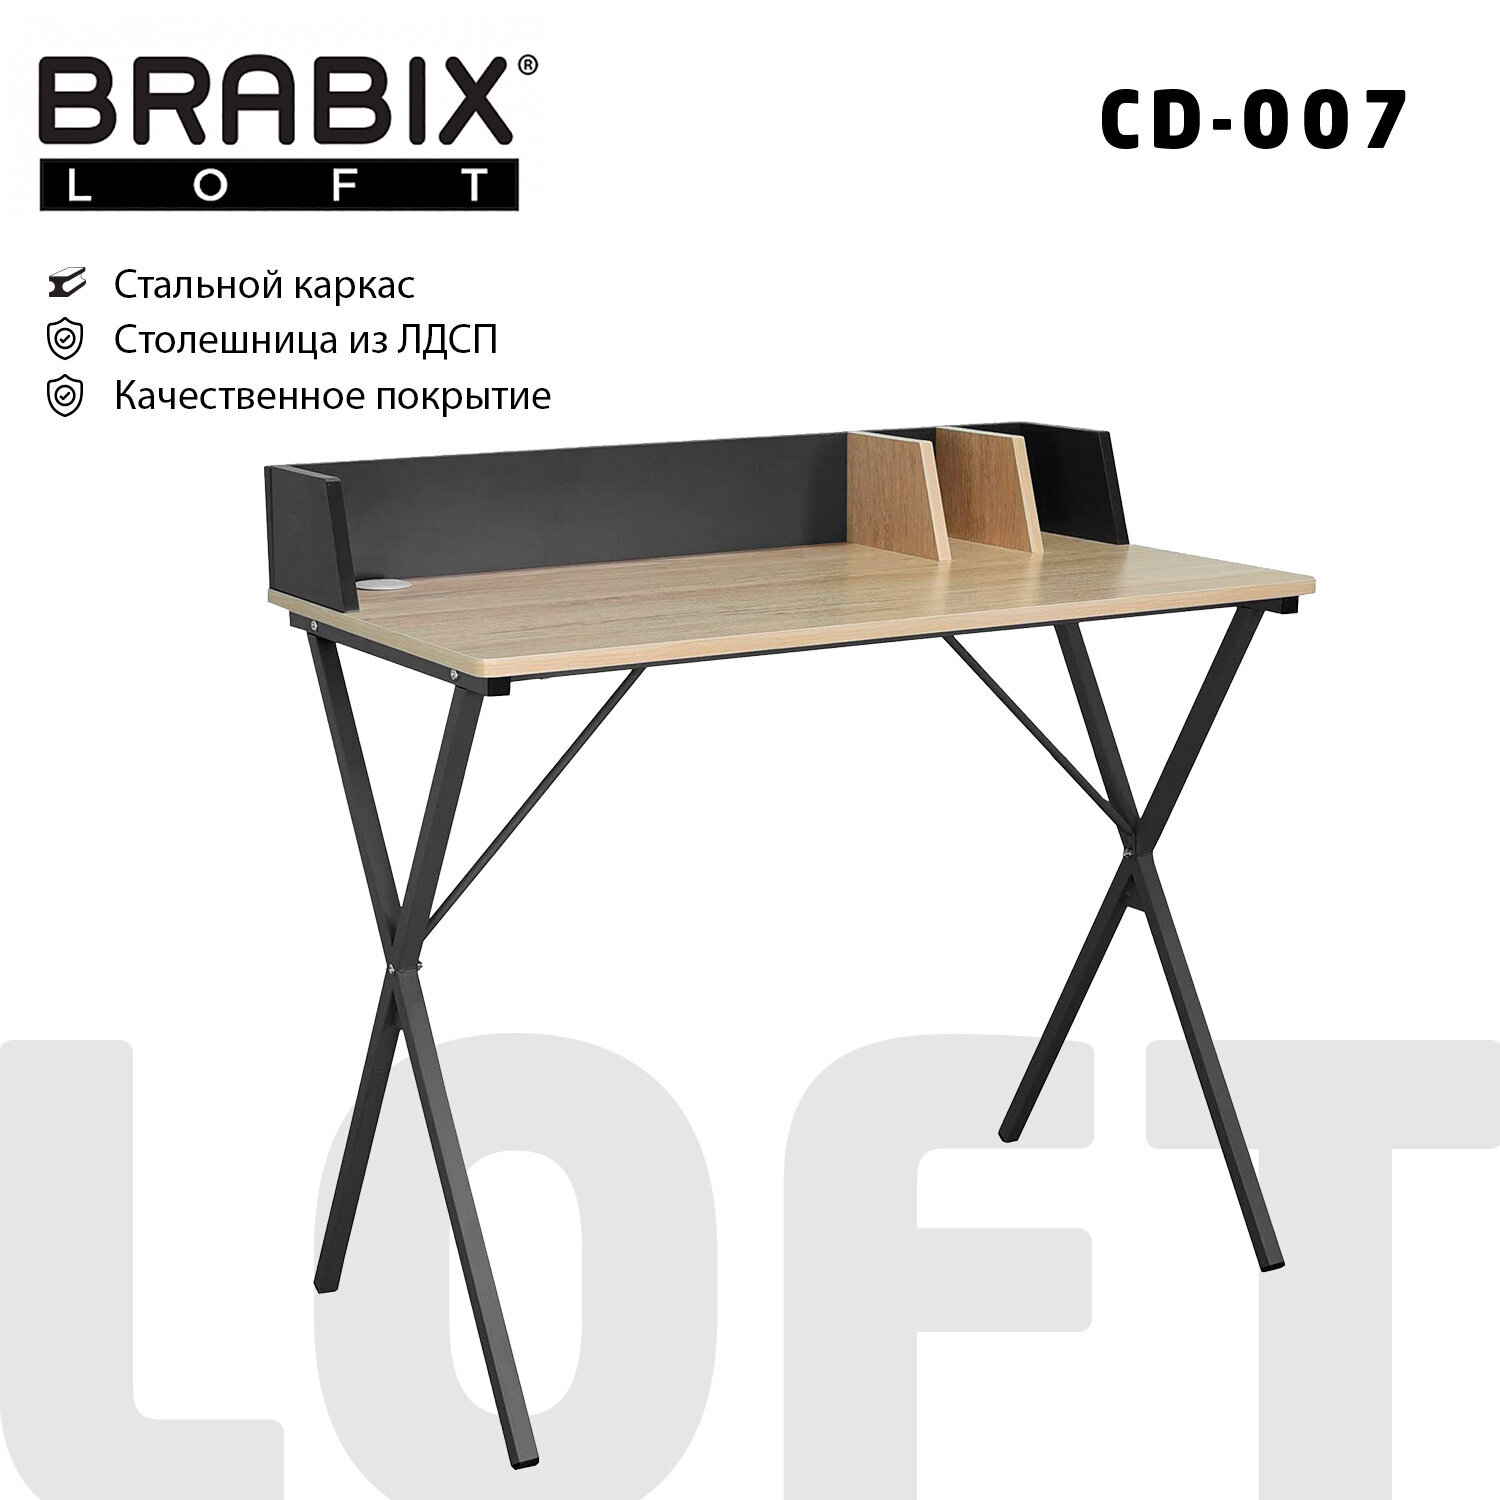 Стол на металлокаркасе Brabix Loft